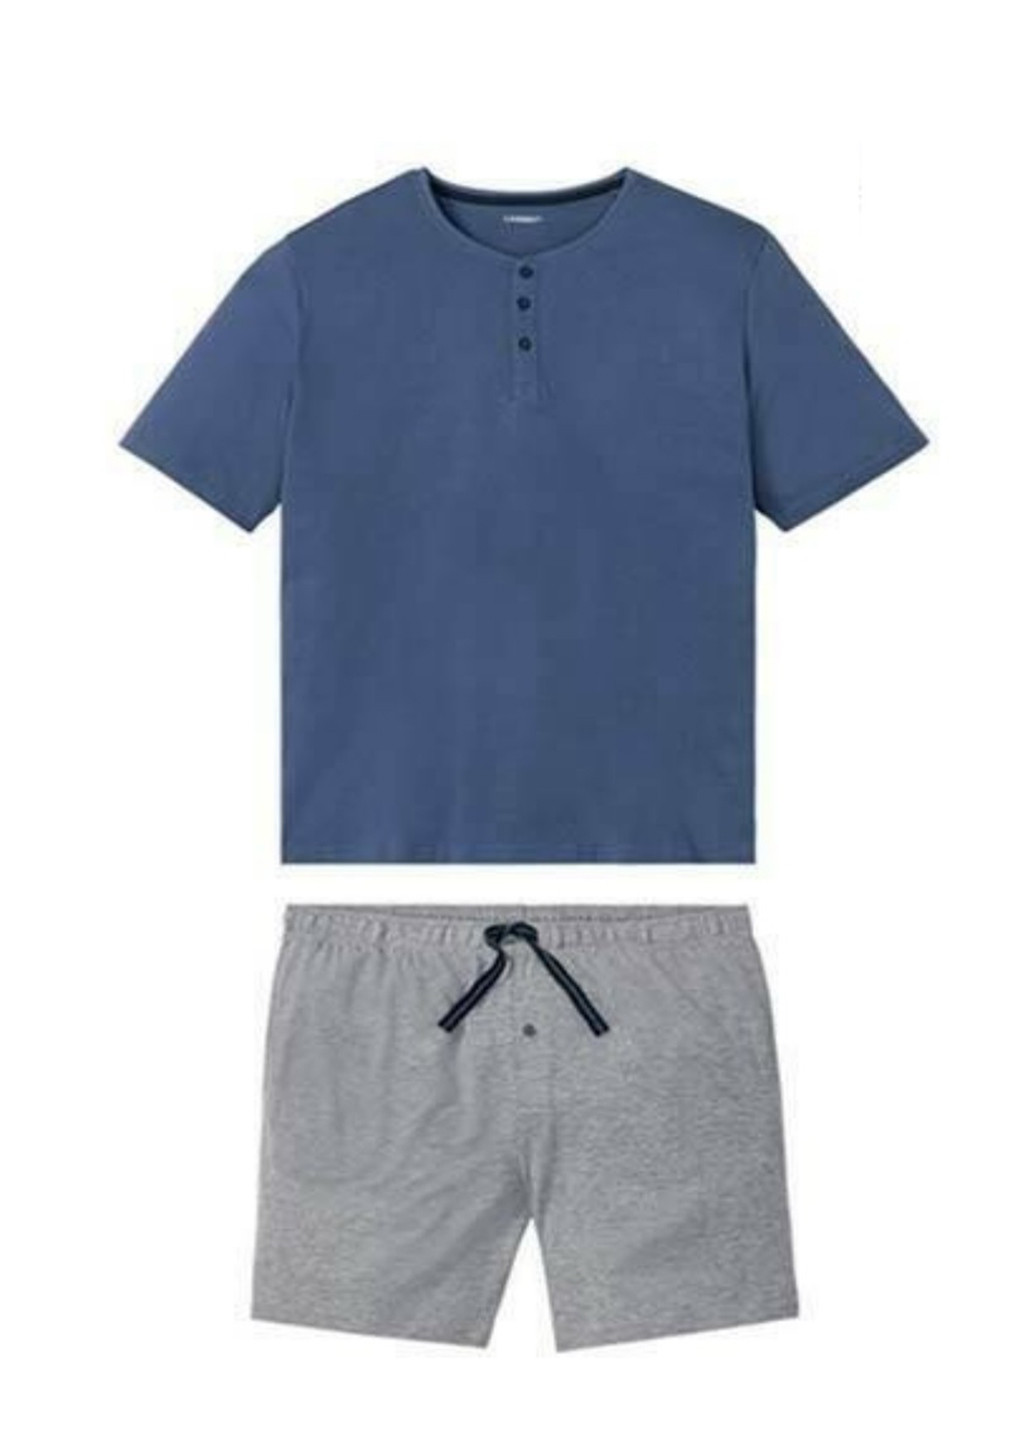 Пижама (футболка, шорты) Livergy футболка + шорты меланж серо-синяя домашняя трикотаж, хлопок